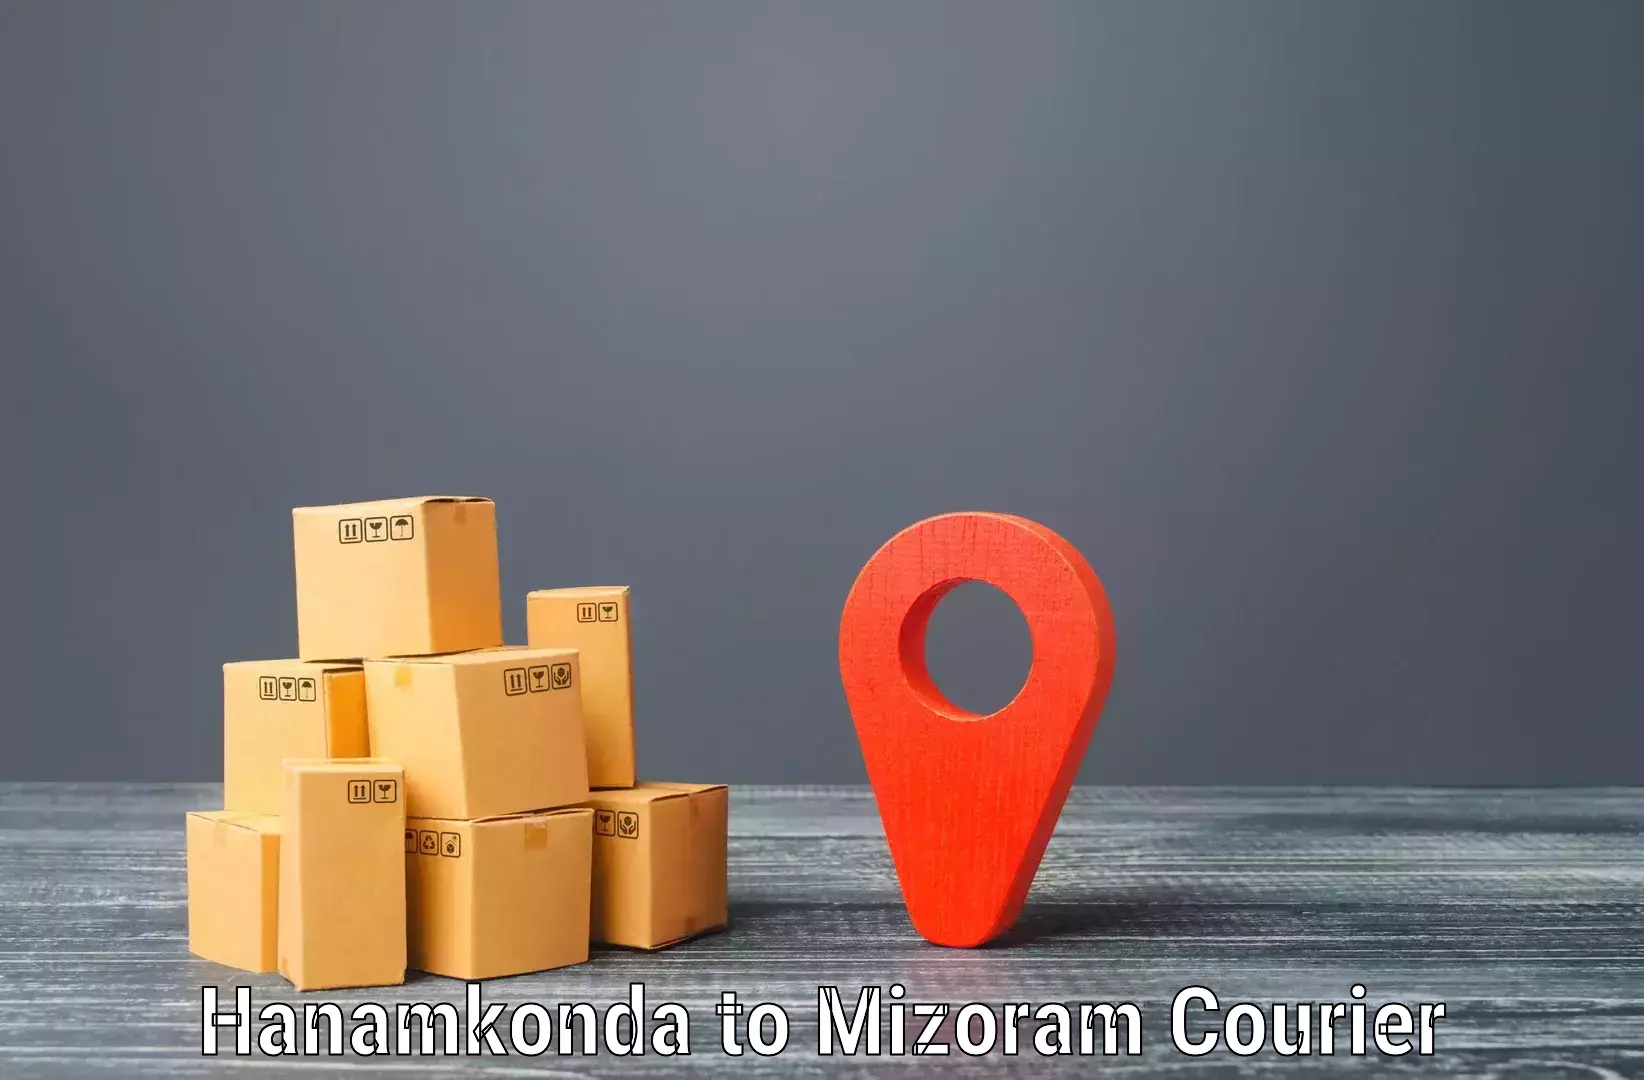 International courier networks Hanamkonda to Aizawl